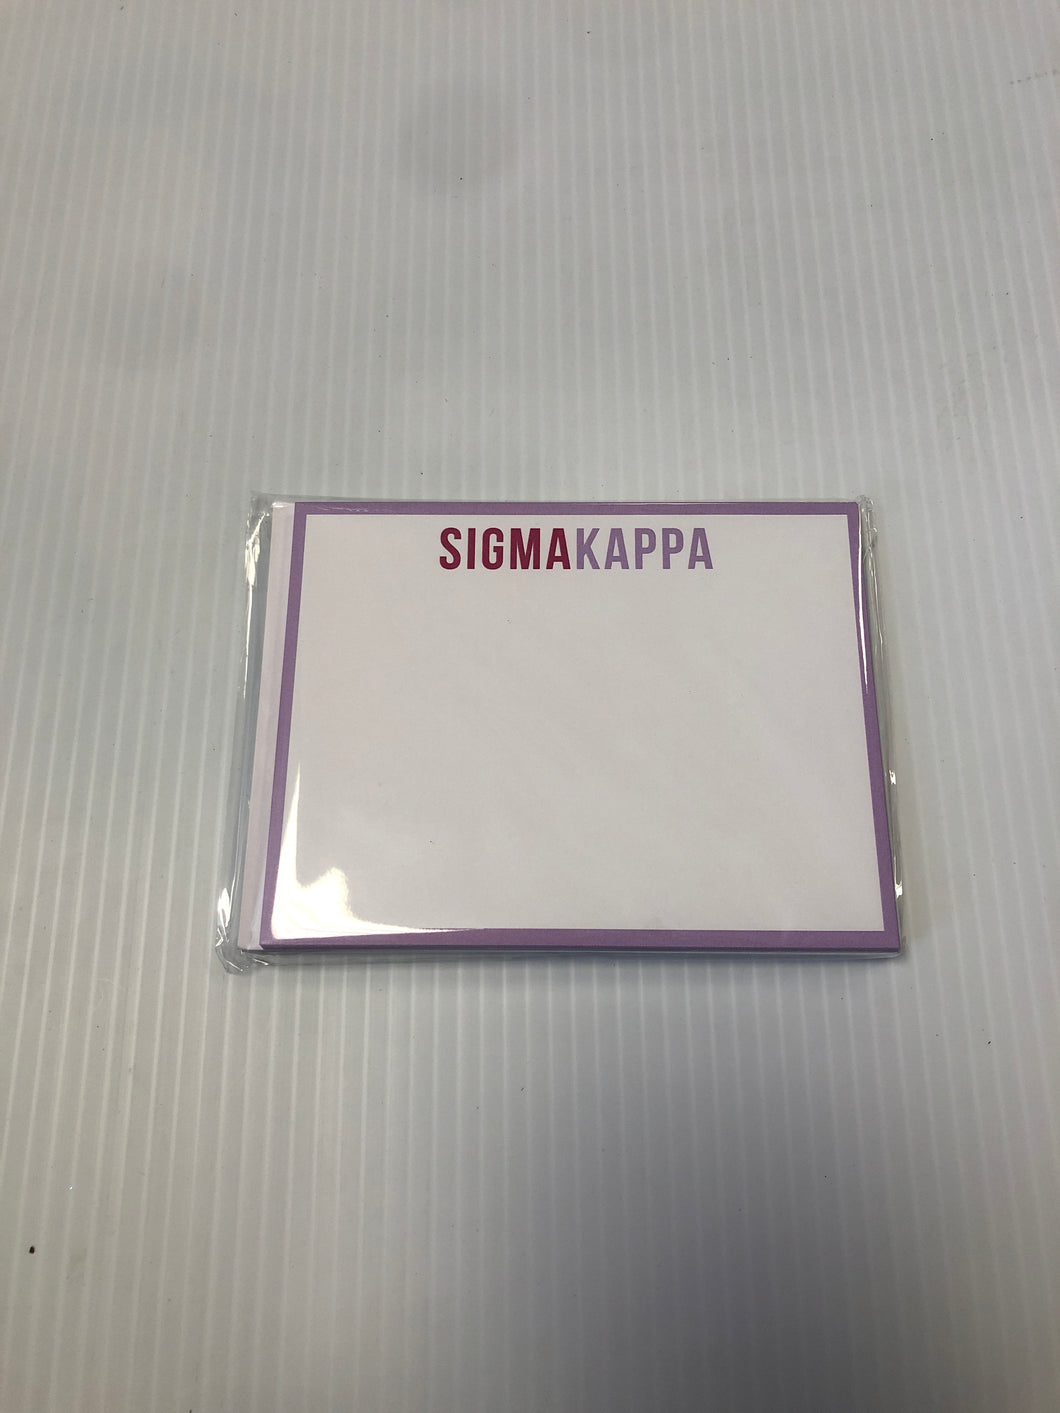 Sigma Kappa 10 count notecards/envelopes